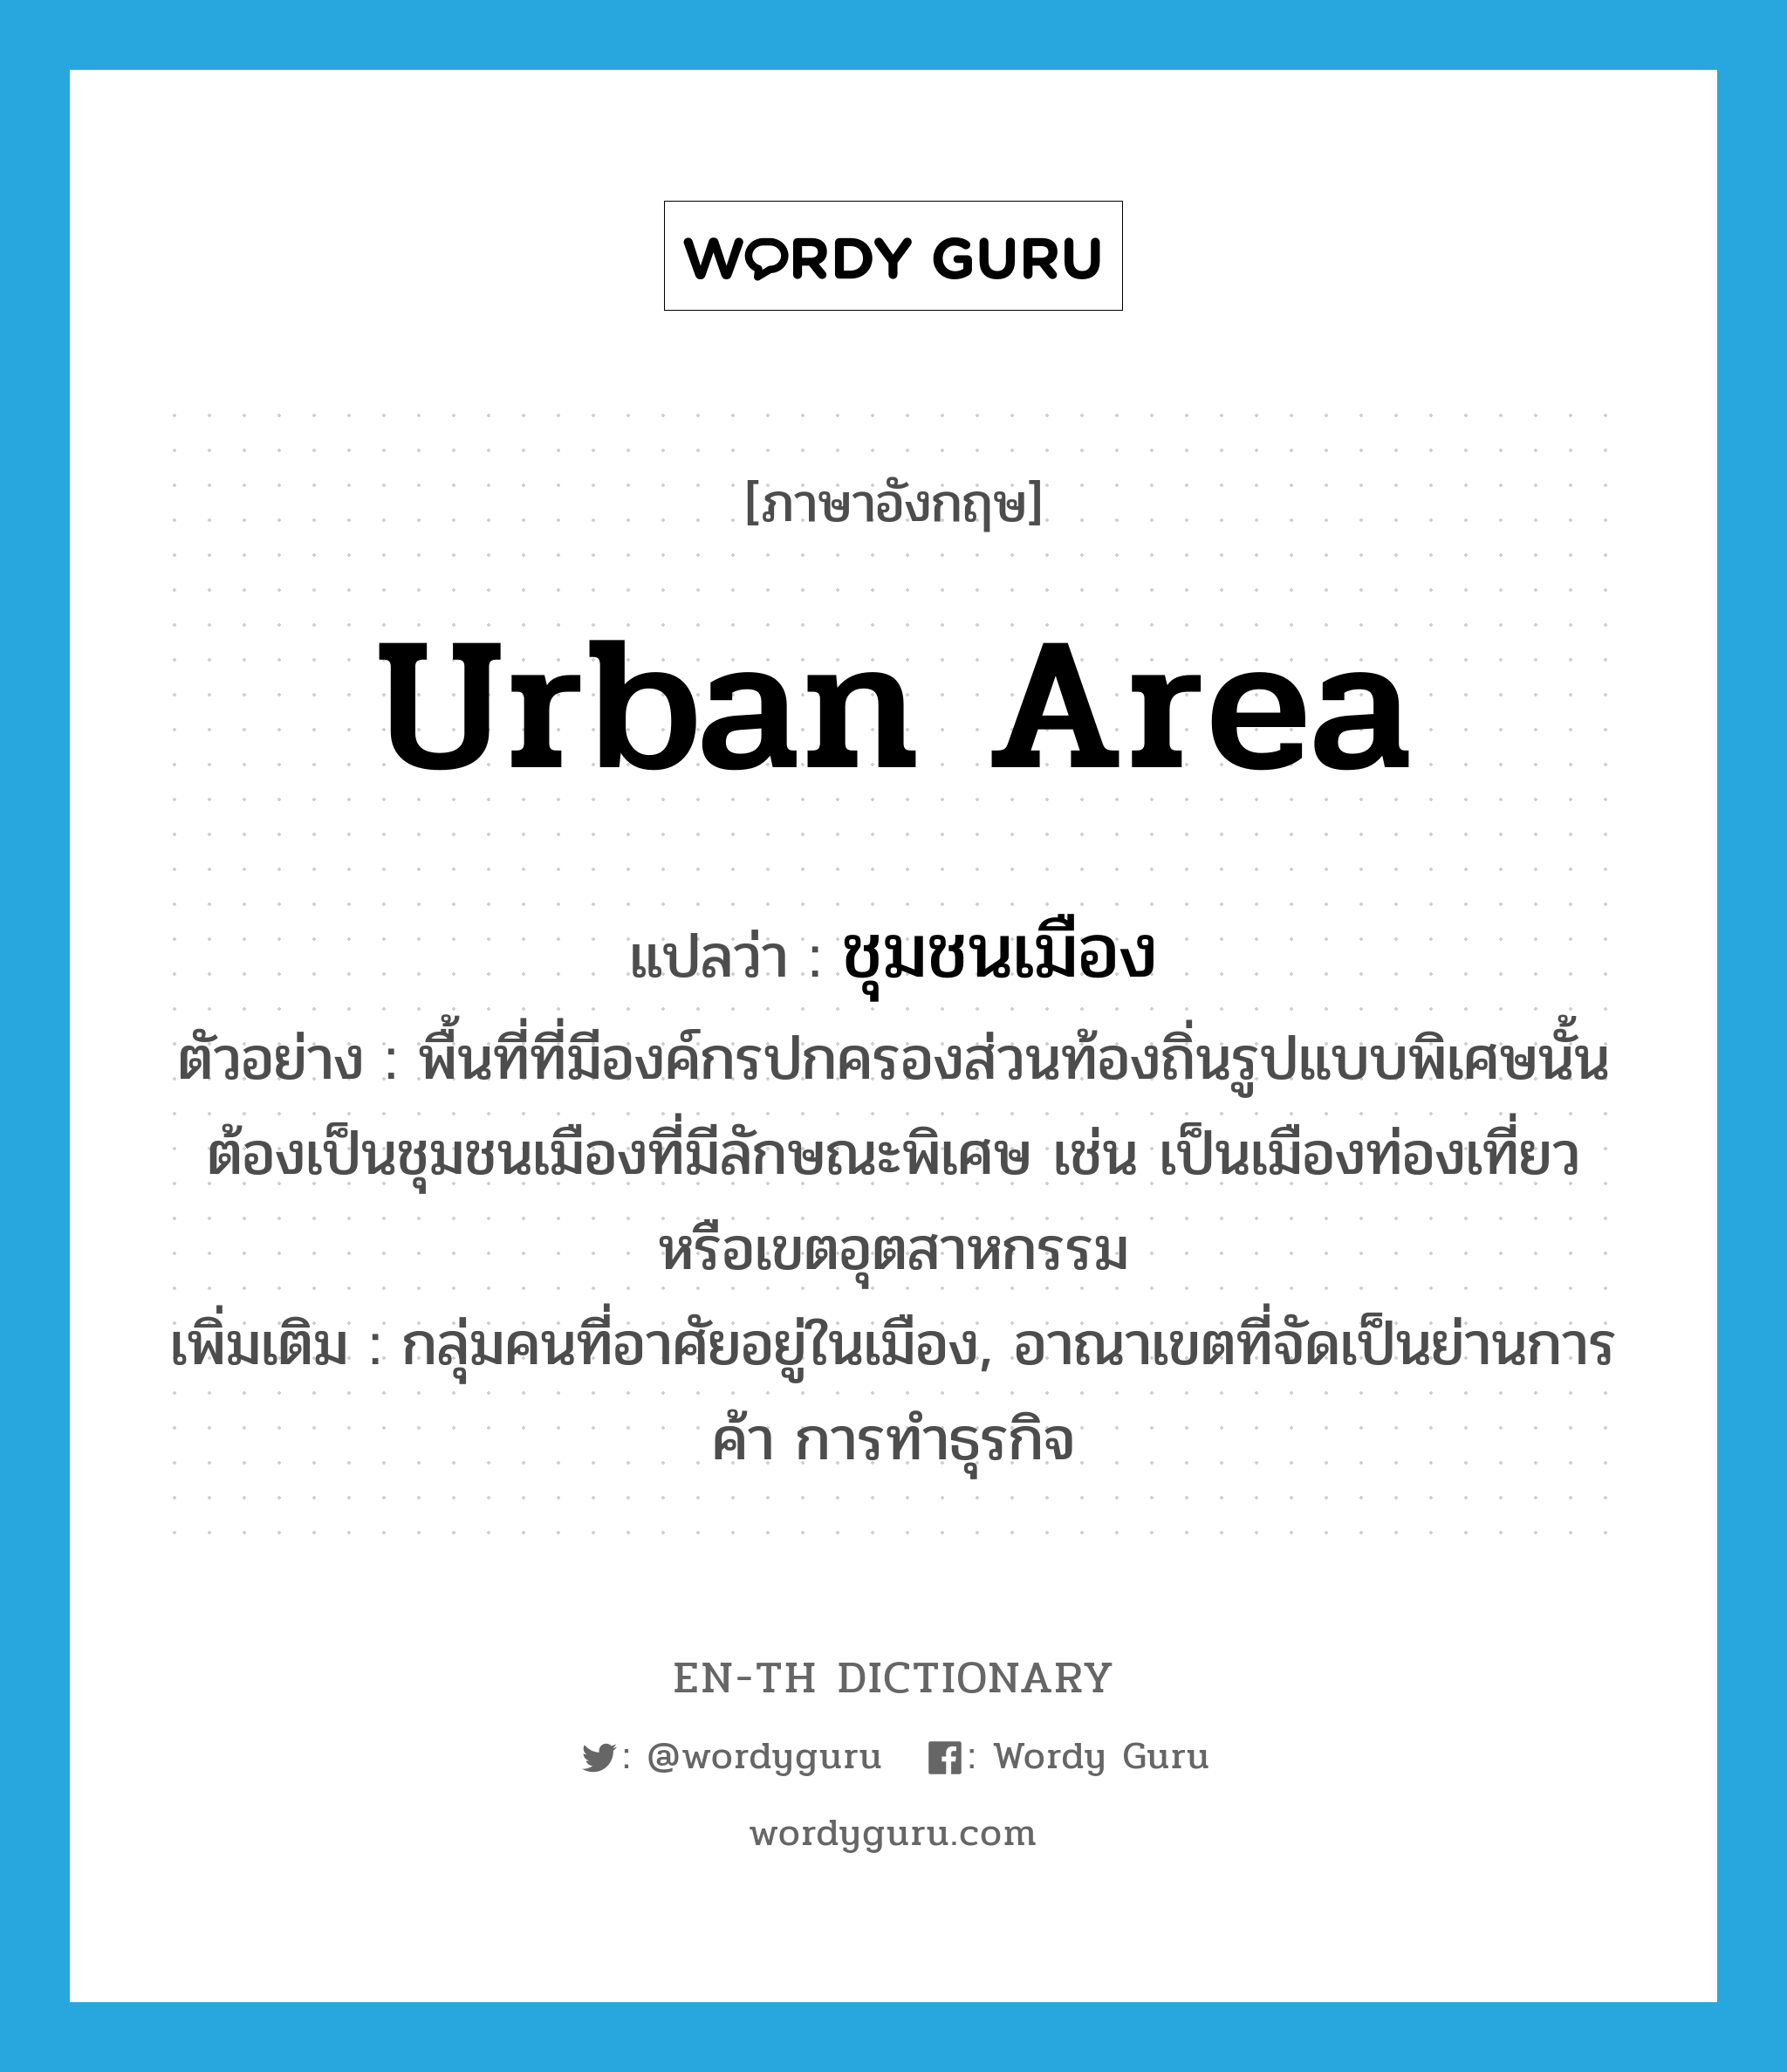 urban area แปลว่า?, คำศัพท์ภาษาอังกฤษ urban area แปลว่า ชุมชนเมือง ประเภท N ตัวอย่าง พื้นที่ที่มีองค์กรปกครองส่วนท้องถิ่นรูปแบบพิเศษนั้นต้องเป็นชุมชนเมืองที่มีลักษณะพิเศษ เช่น เป็นเมืองท่องเที่ยว หรือเขตอุตสาหกรรม เพิ่มเติม กลุ่มคนที่อาศัยอยู่ในเมือง, อาณาเขตที่จัดเป็นย่านการค้า การทำธุรกิจ หมวด N